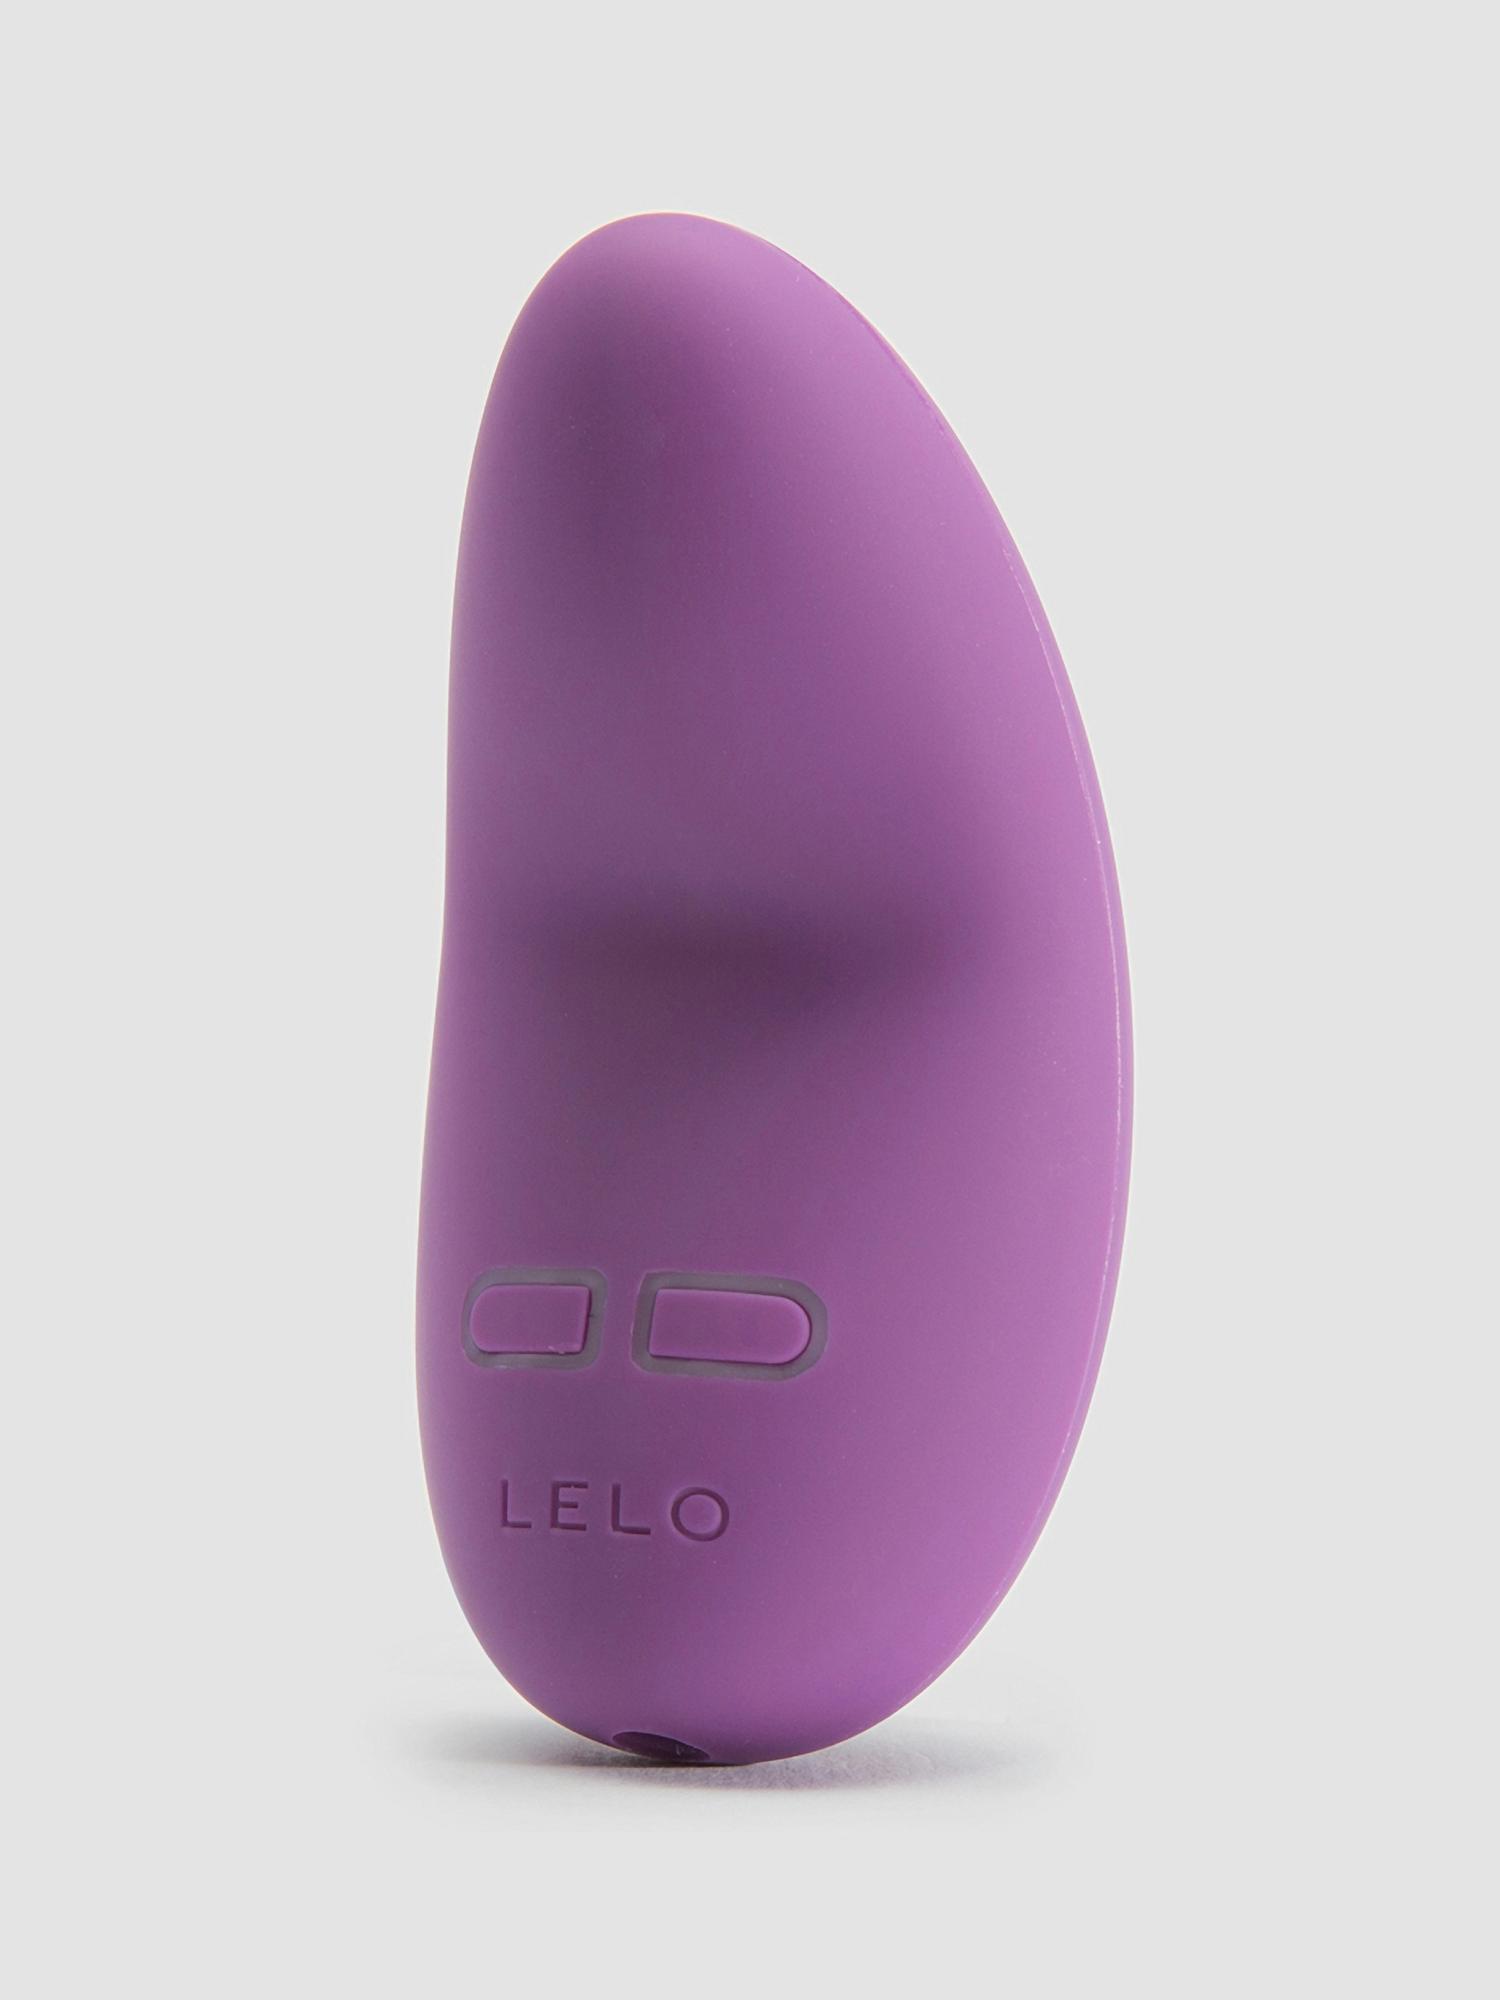 Lelo Lily 2 Luxury Clitoral Vibrator